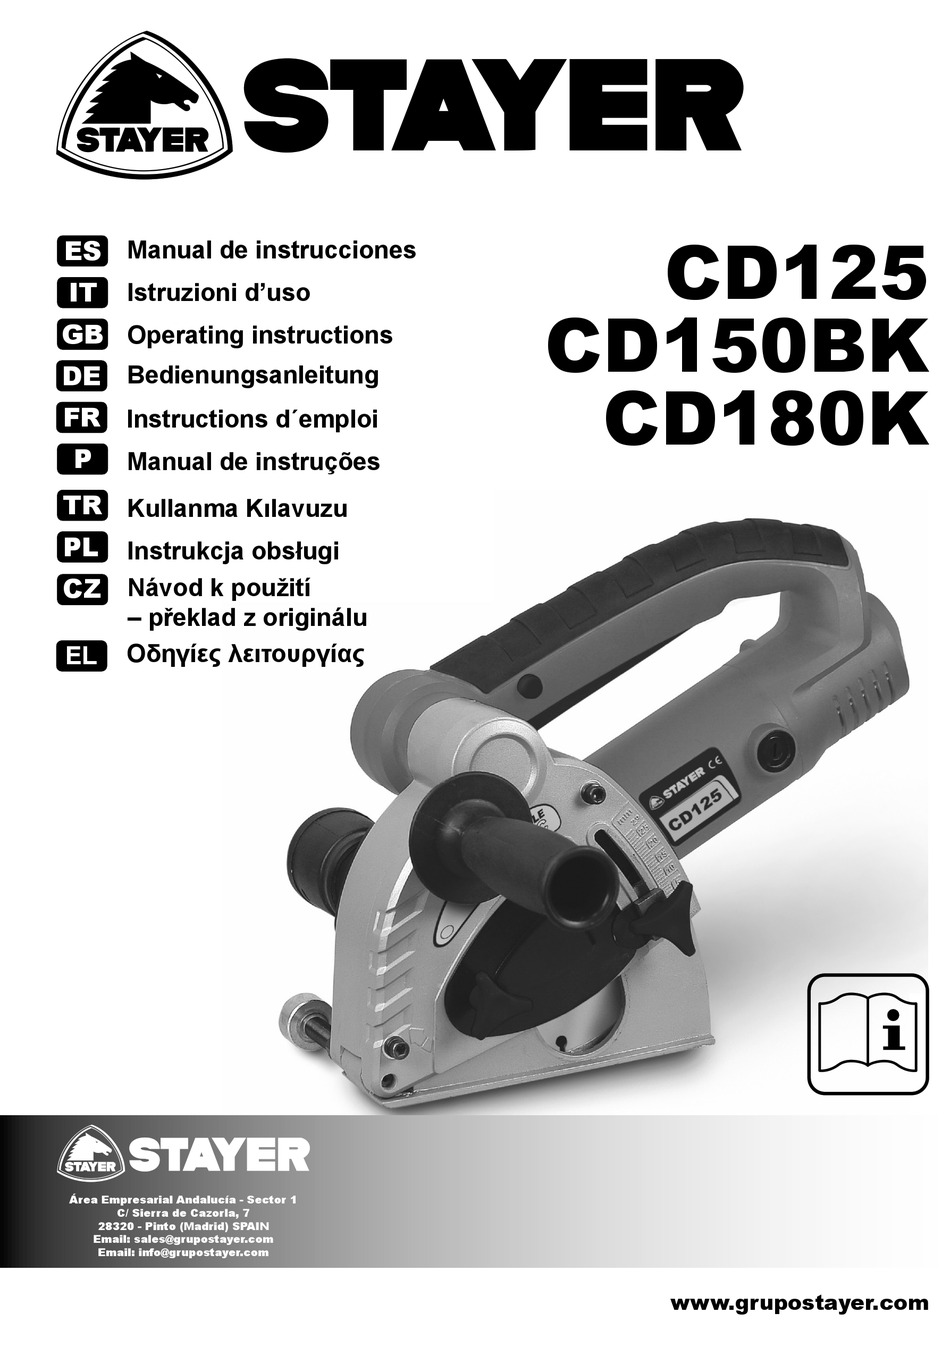 STAYER CD125 OPERATING INSTRUCTIONS MANUAL Pdf Download | ManualsLib